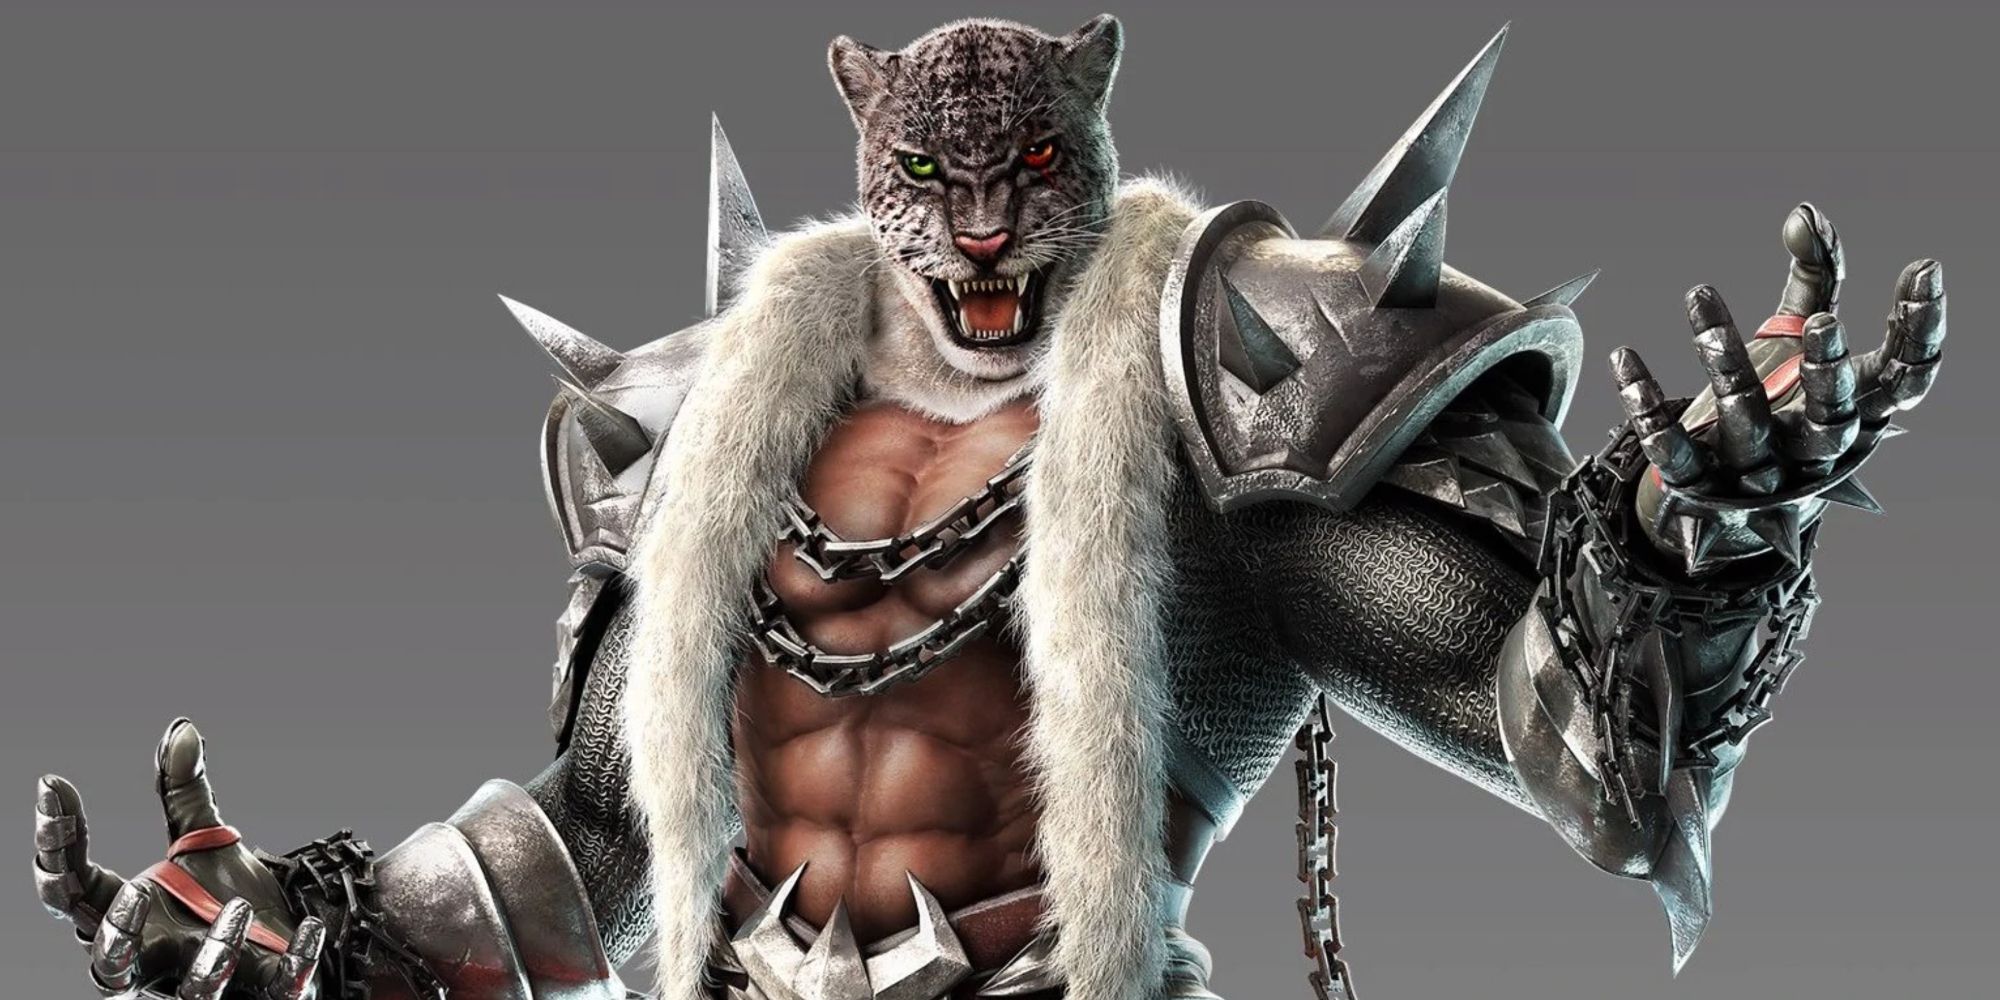 Armor King, a notorious wrestler from the Tekken series